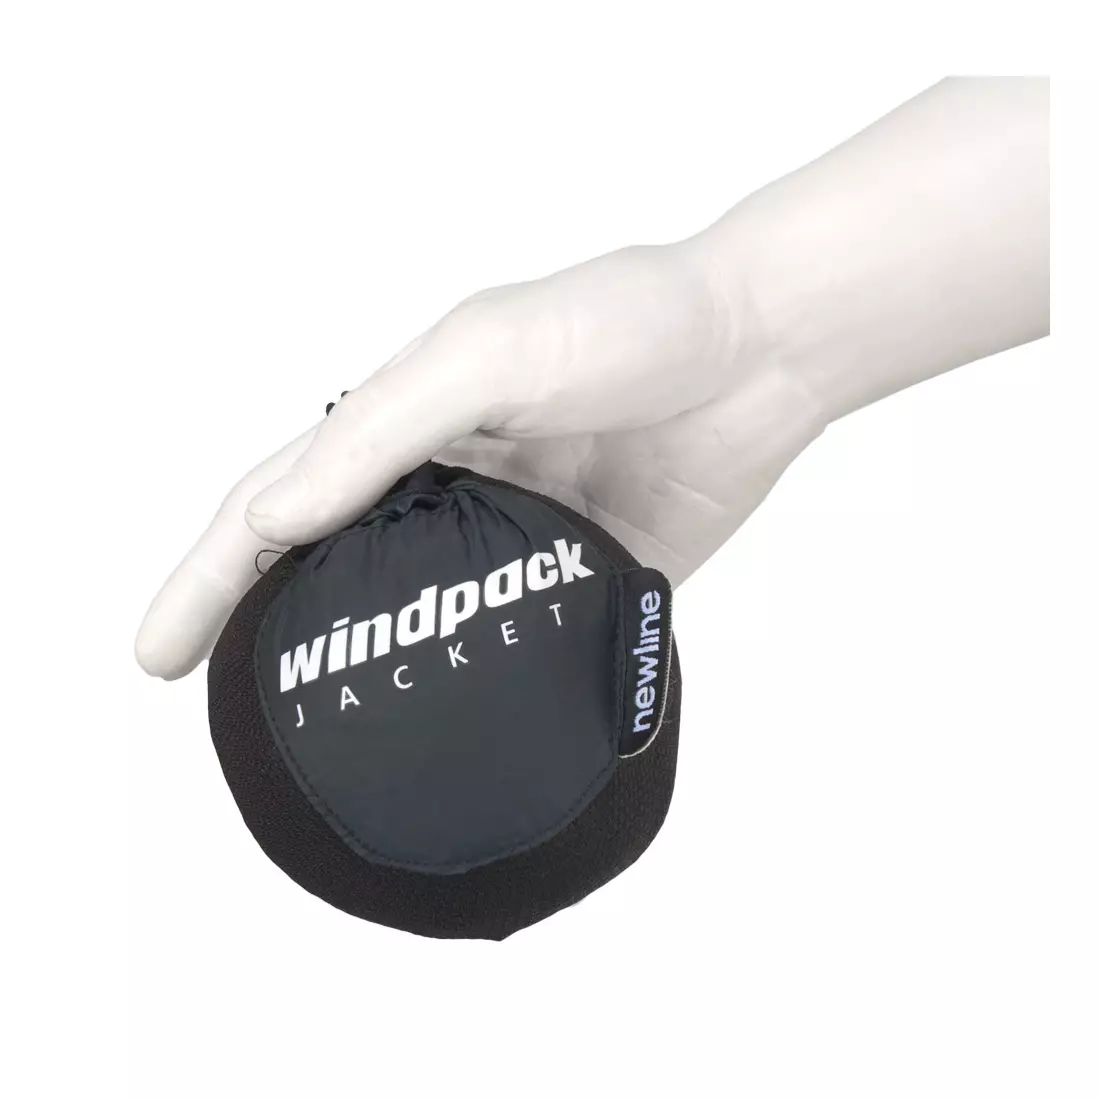 NEWLINE WINDPACK JACKET - ultra-light sports windbreaker 14176-060, color: Black